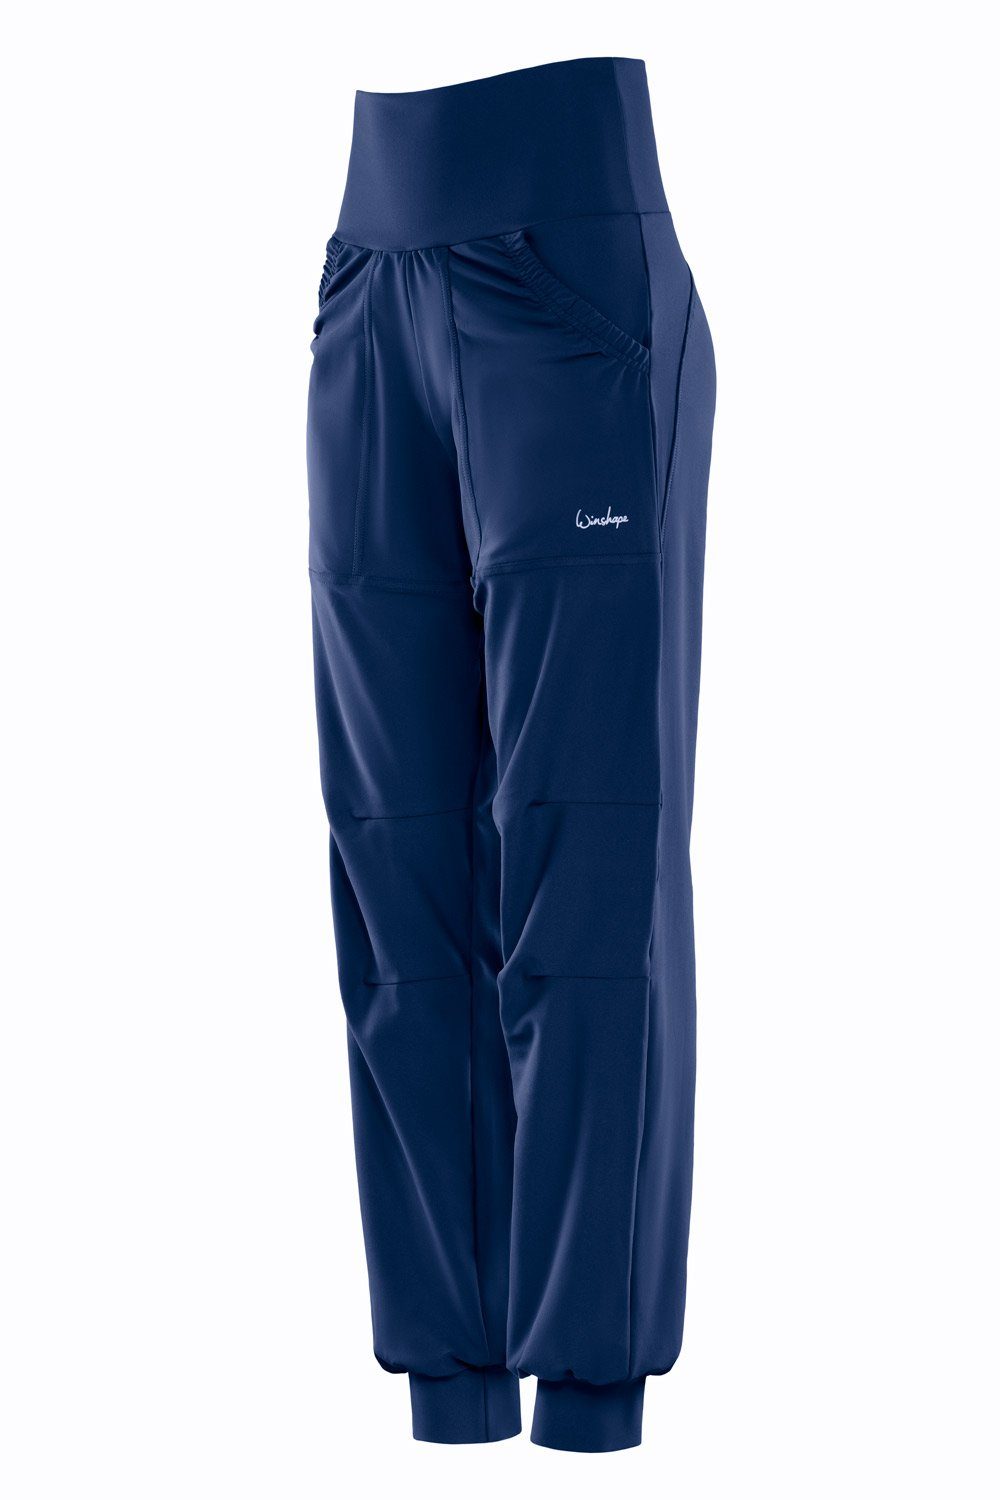 blue Waist High Leisure Time LEI101C Sporthose Functional Winshape Trousers Comfort dark